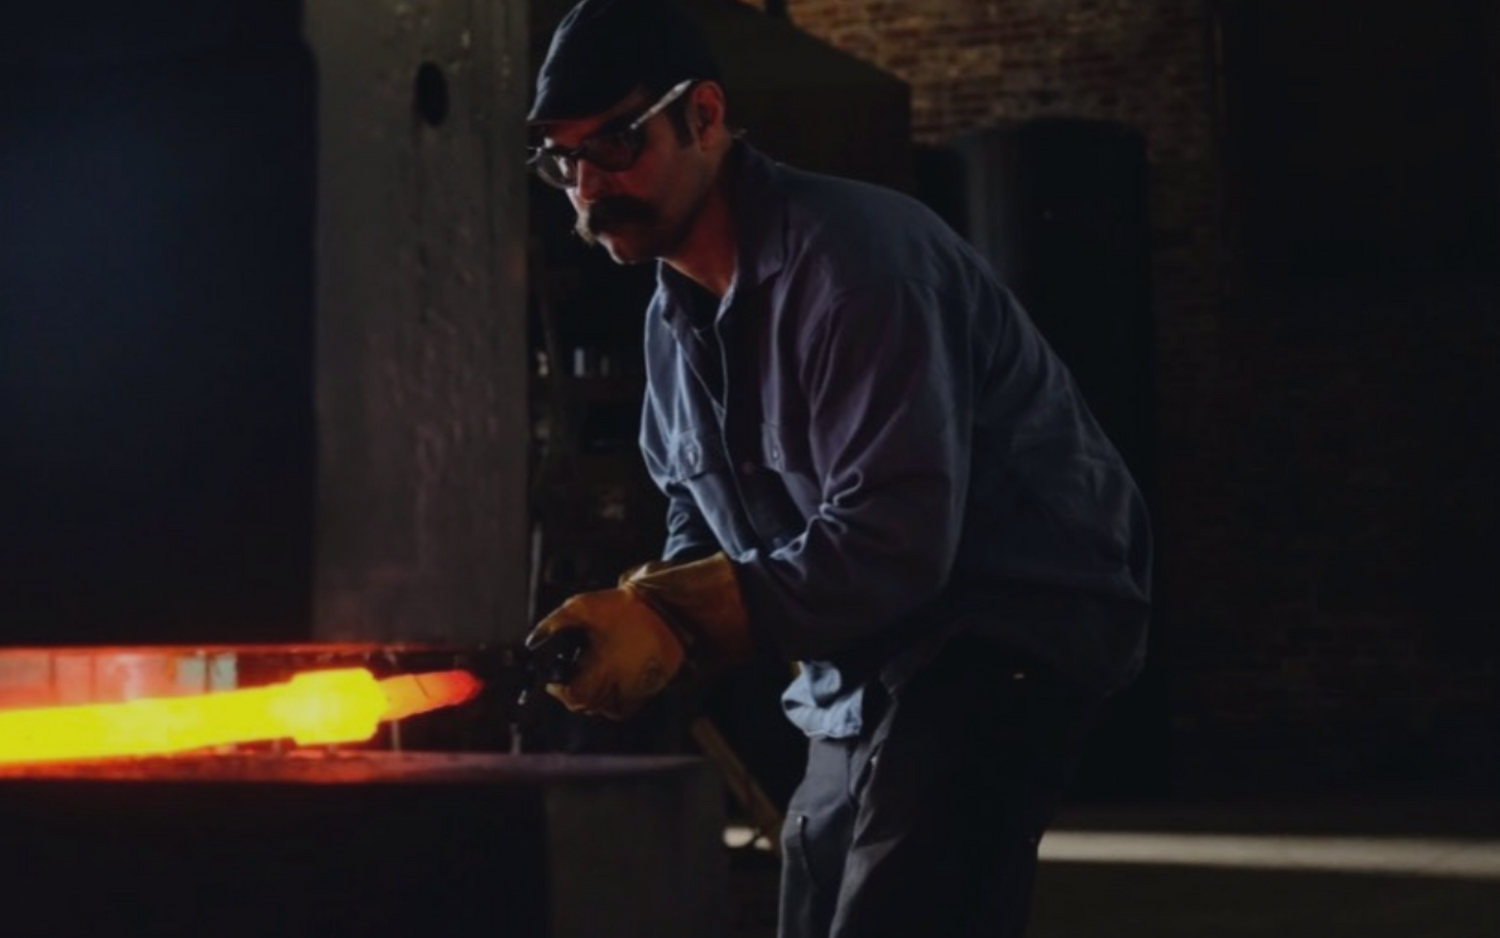 Jesse Savage – The Blacksmith